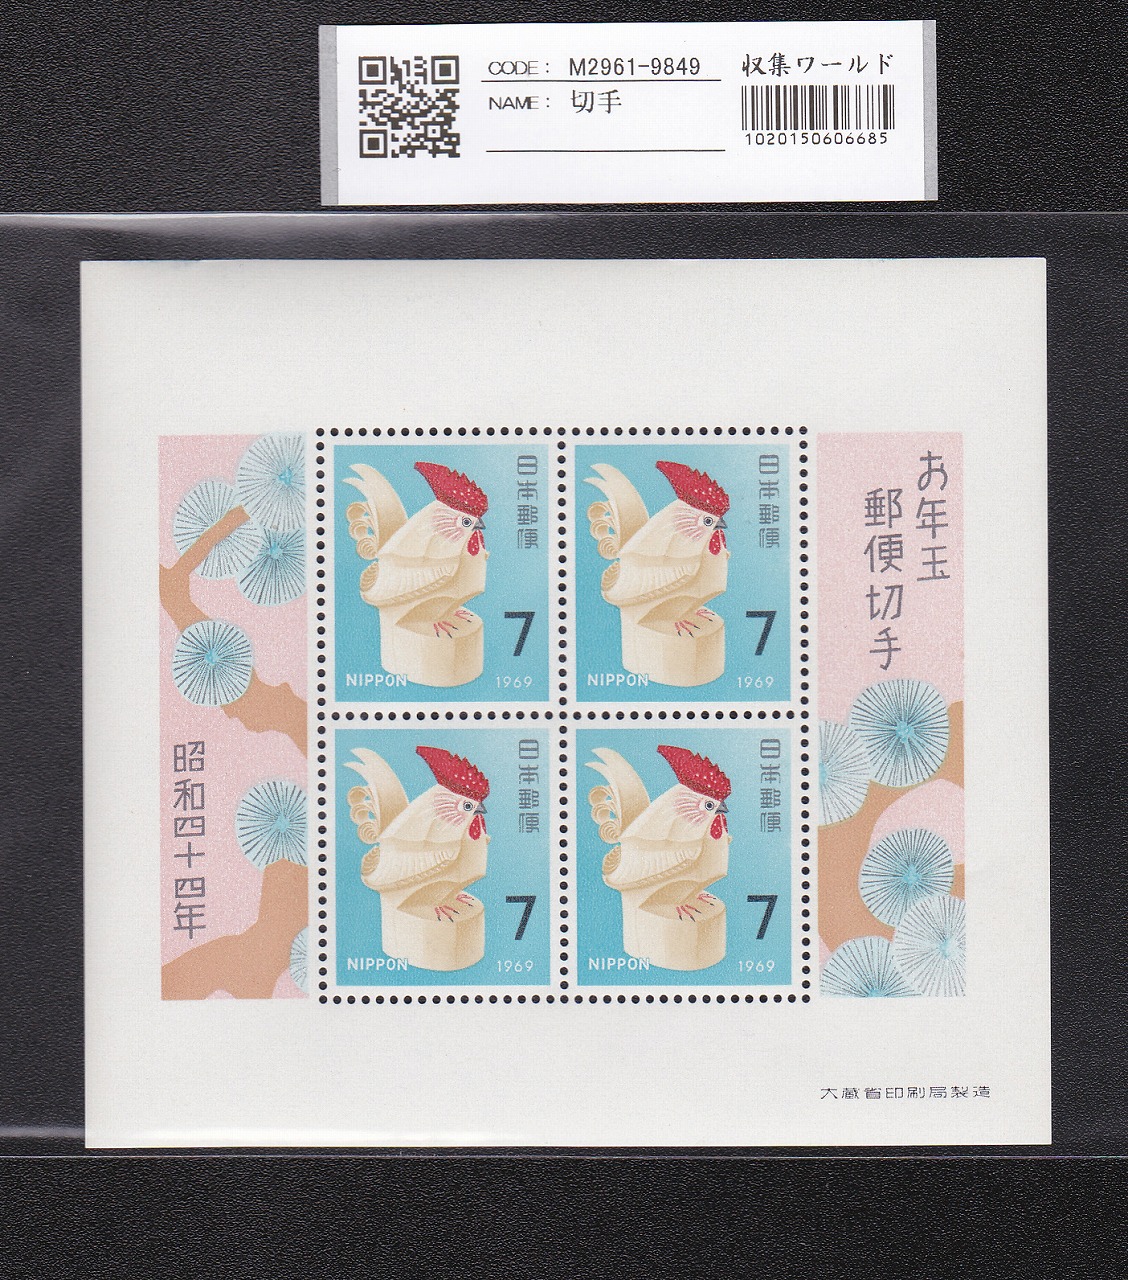 お年玉 郵便切手 鶏年 昭和44年(1969)発行 7円×4枚小型シート 未使用